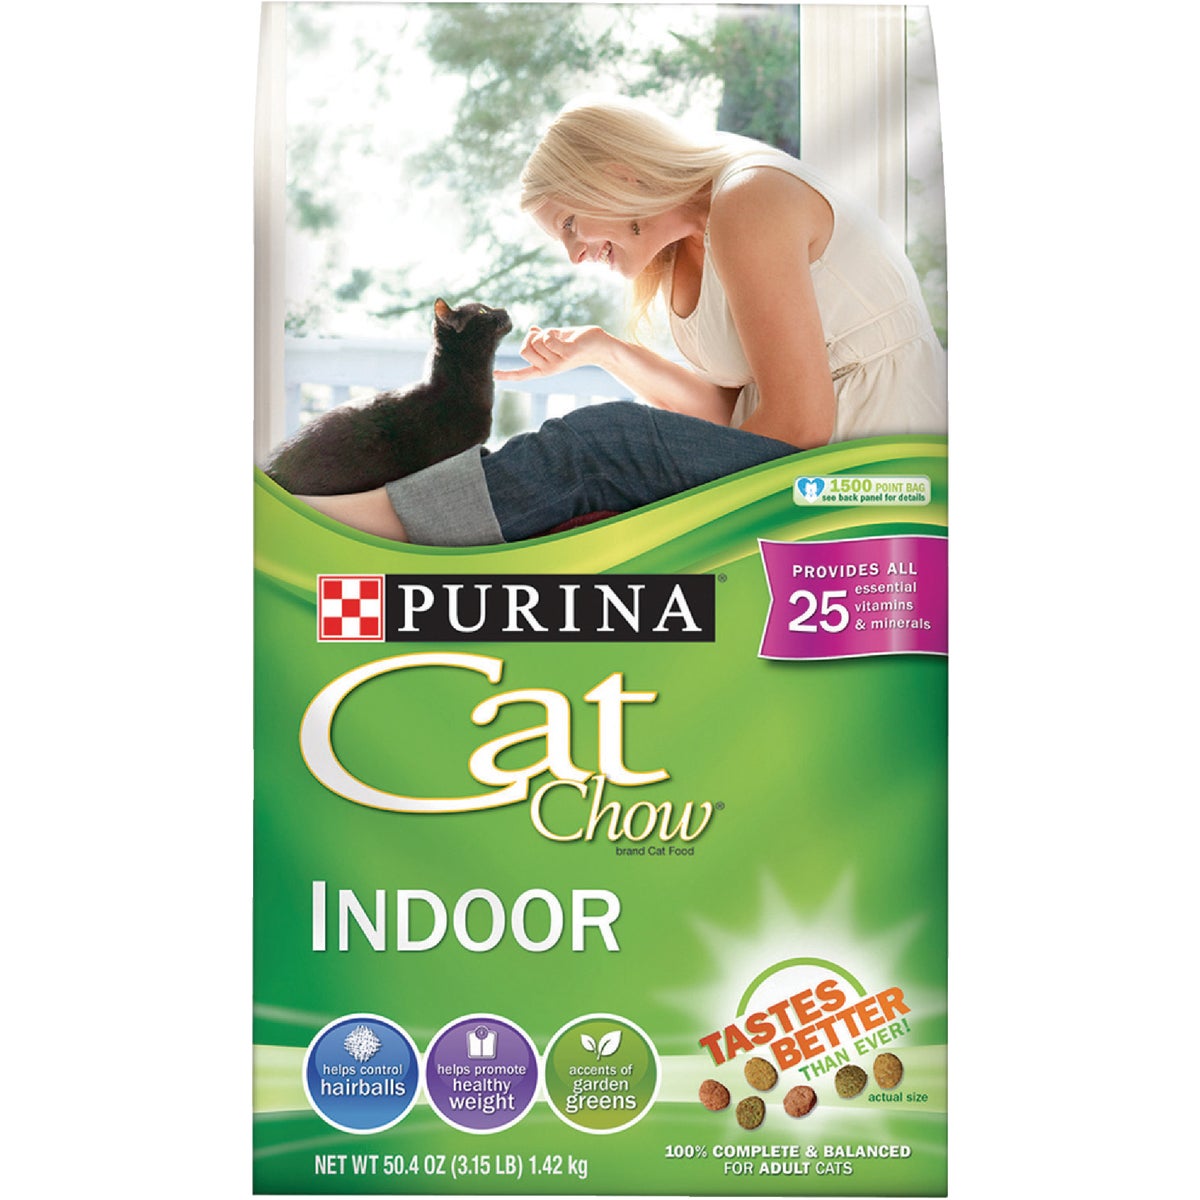 Item 701273, Purina Cat Chow indoor formula for adult cats.